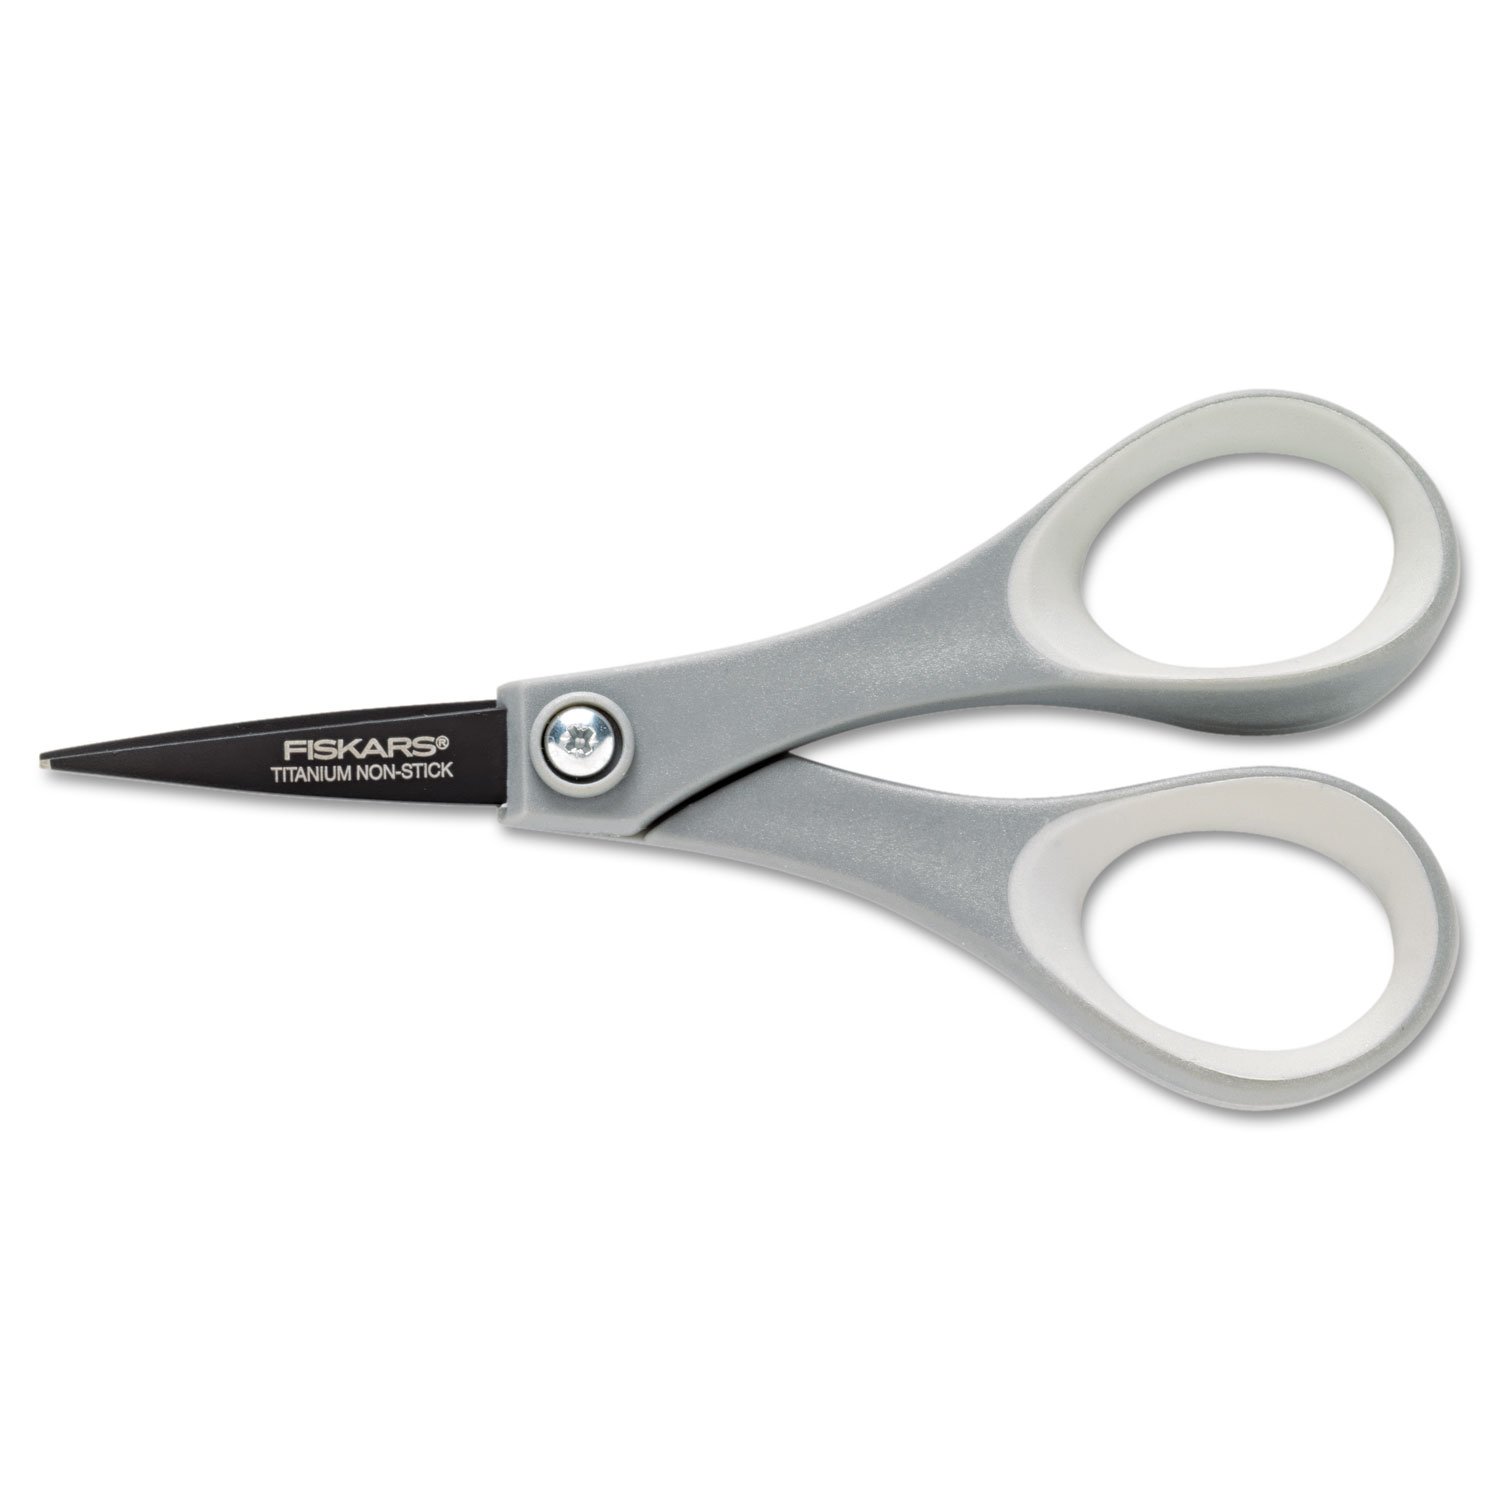  Fiskars 154110-1001 Performance Non-Stick Titanium Softgrip Scissors, Pointed Tip, 5 Long, 1.6 Cut Length, Gray Straight Handle (FSK01005411) 